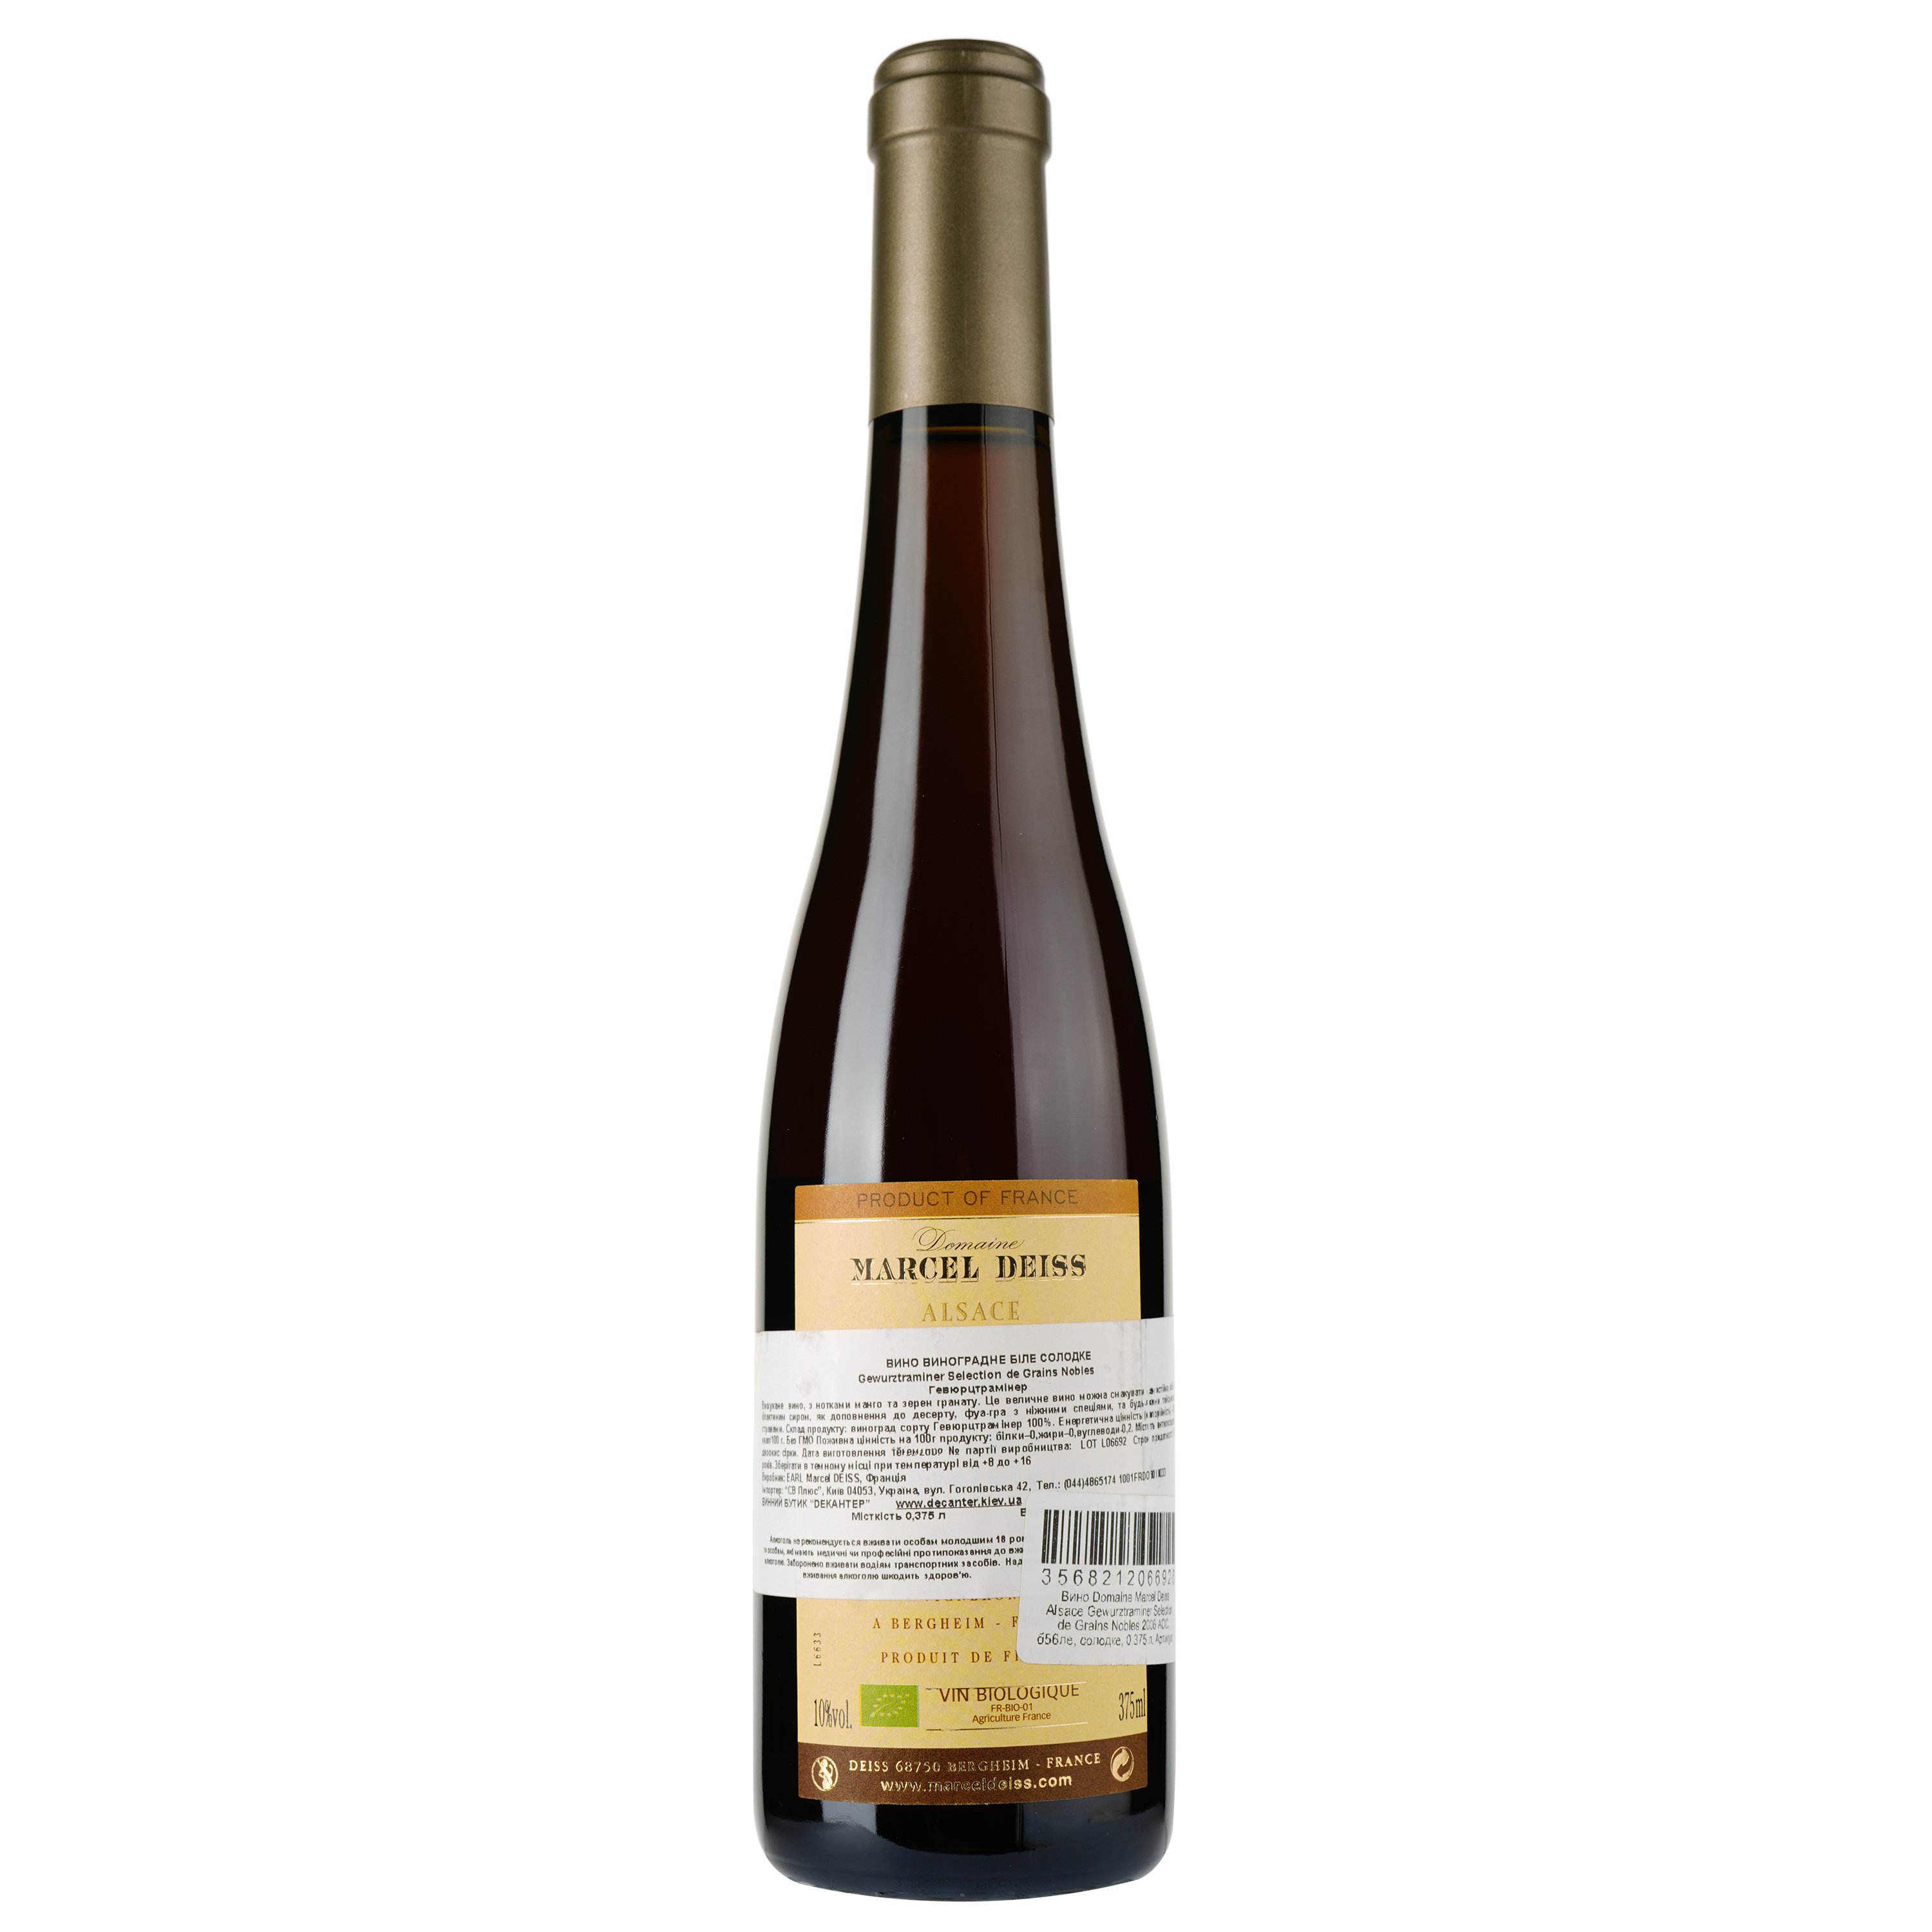 Вино Domaine Marcel Deiss Alsace Gewurztraminer Selection de Grains Nobles 2006 AOC, біле, солодке, 0,375 л - фото 2